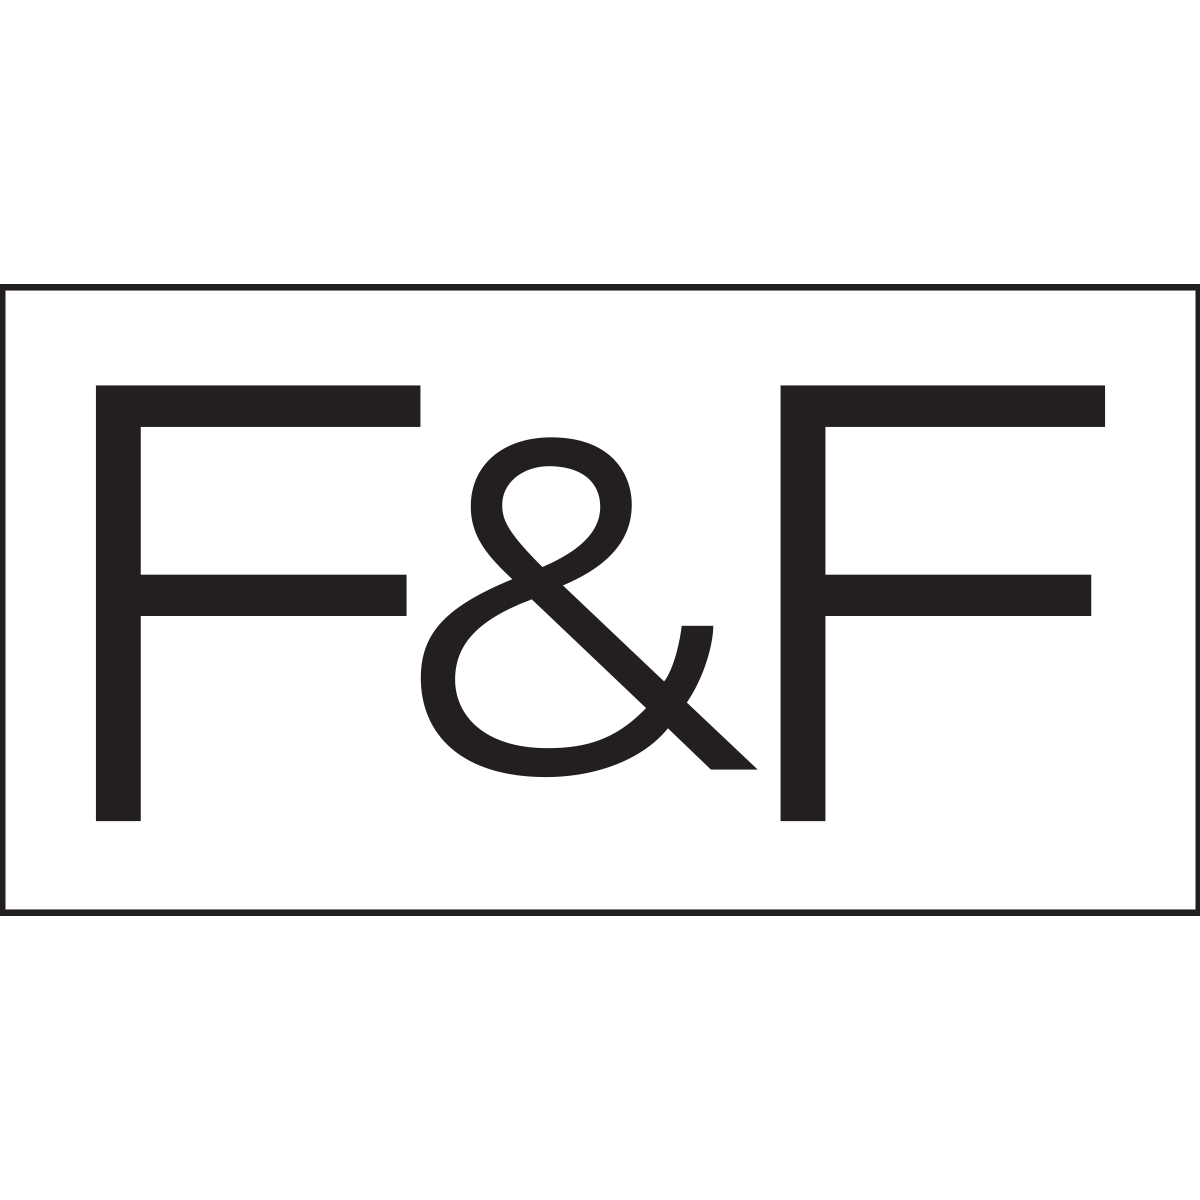 F&F Logo